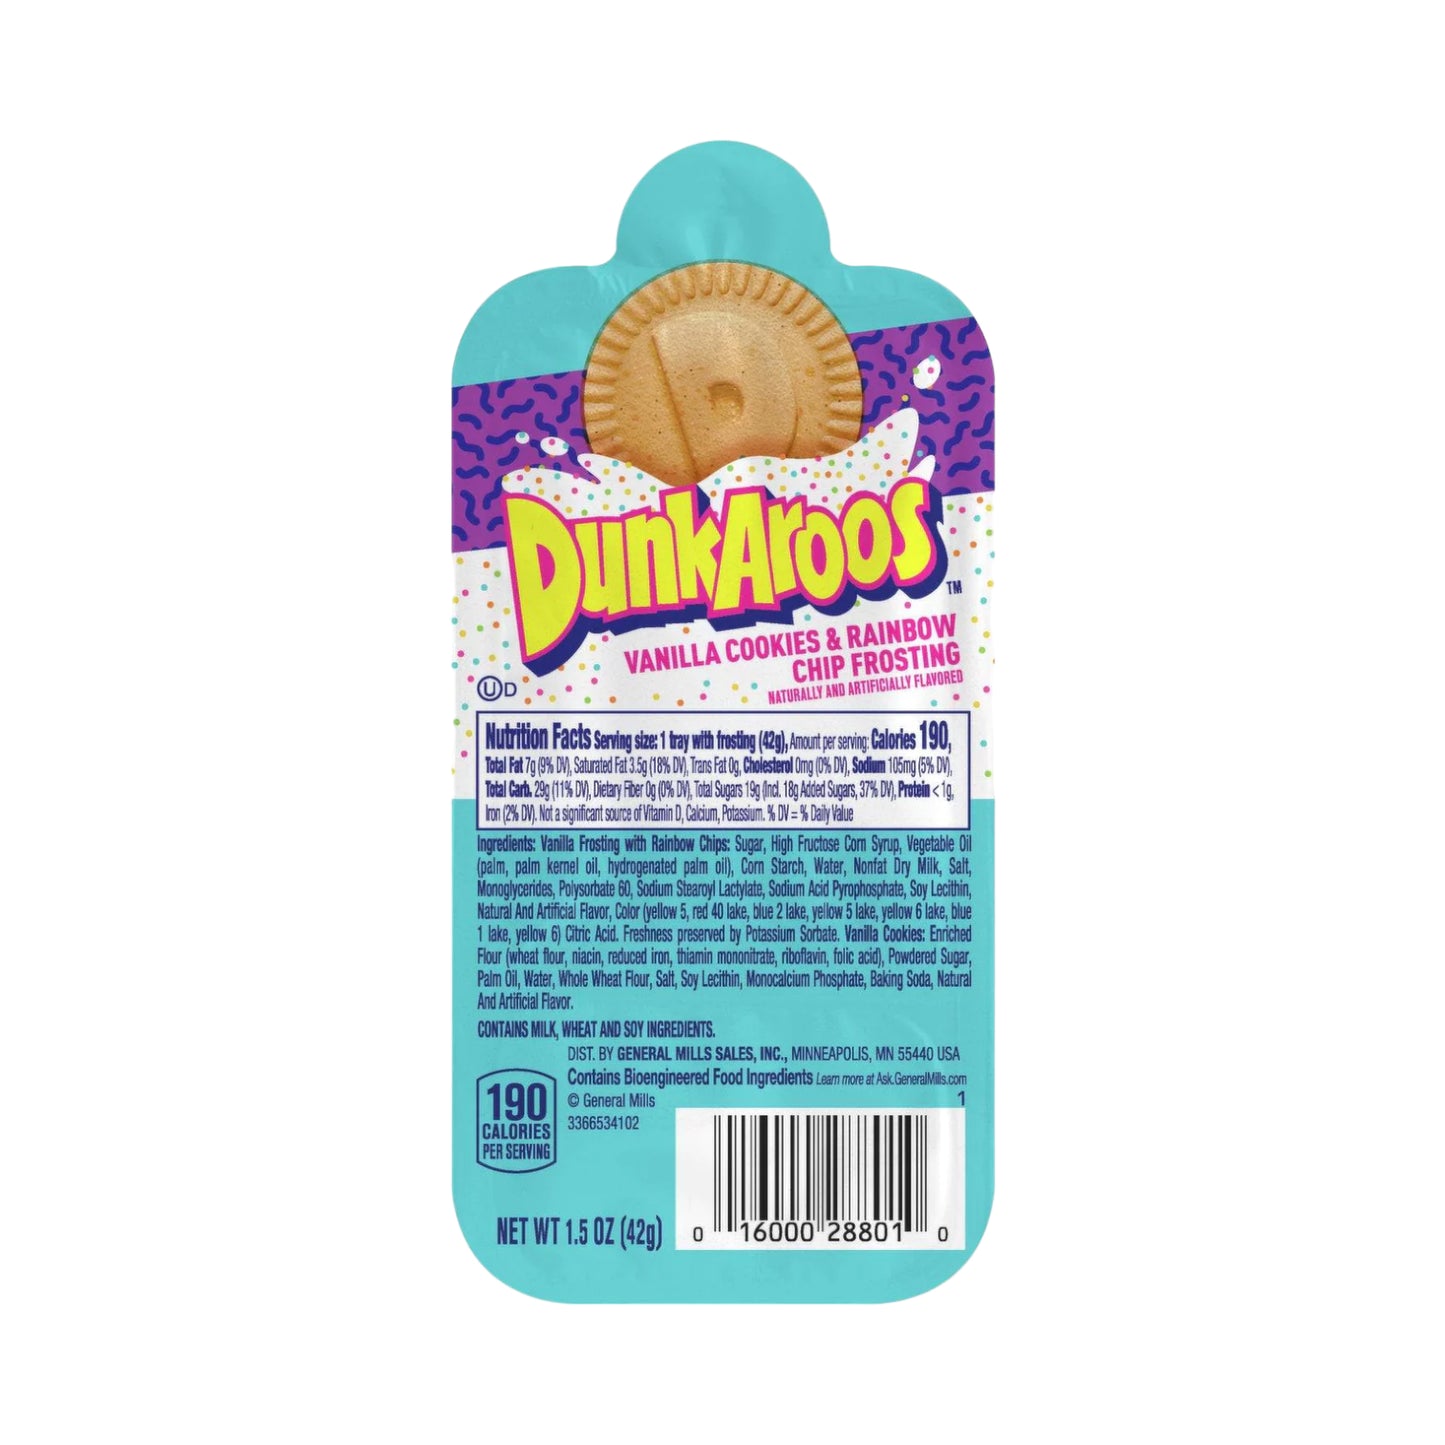 Dunkaroo Vanilla Cookies & Rainbow Chip Frosting - 1.5oz (42g)